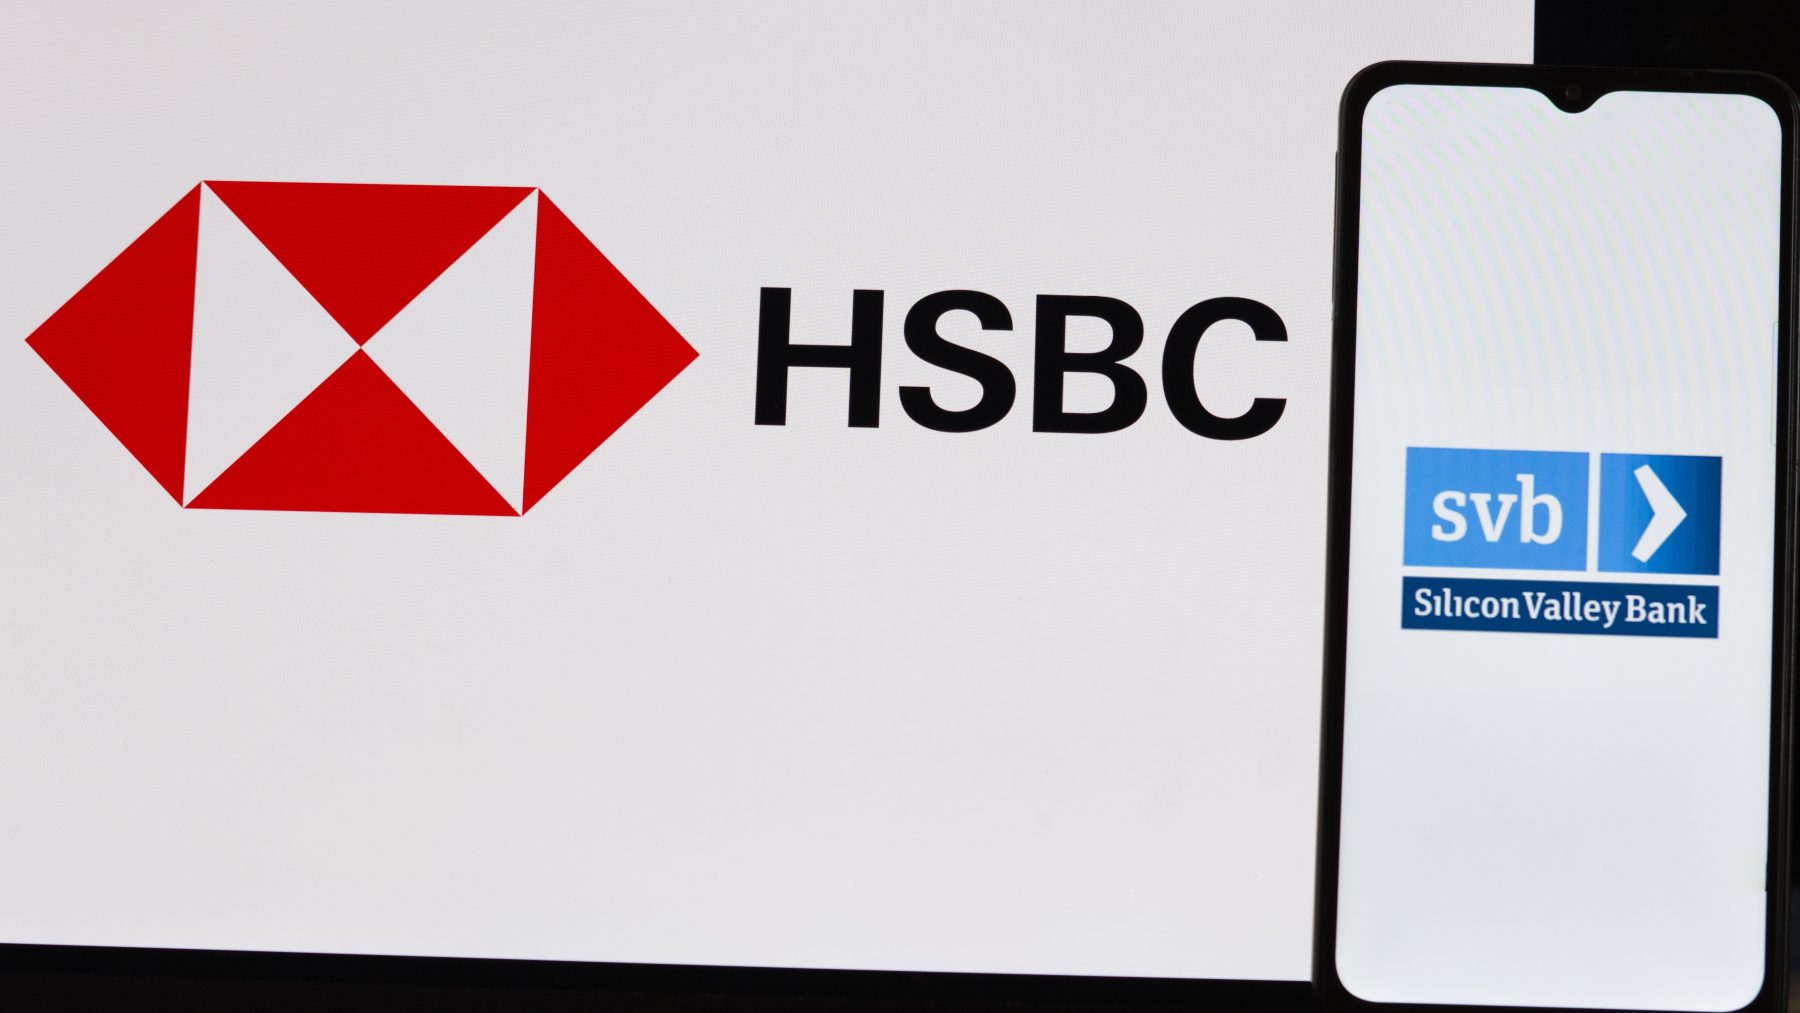 SVB UK to rebrand after HSBC rescue deal